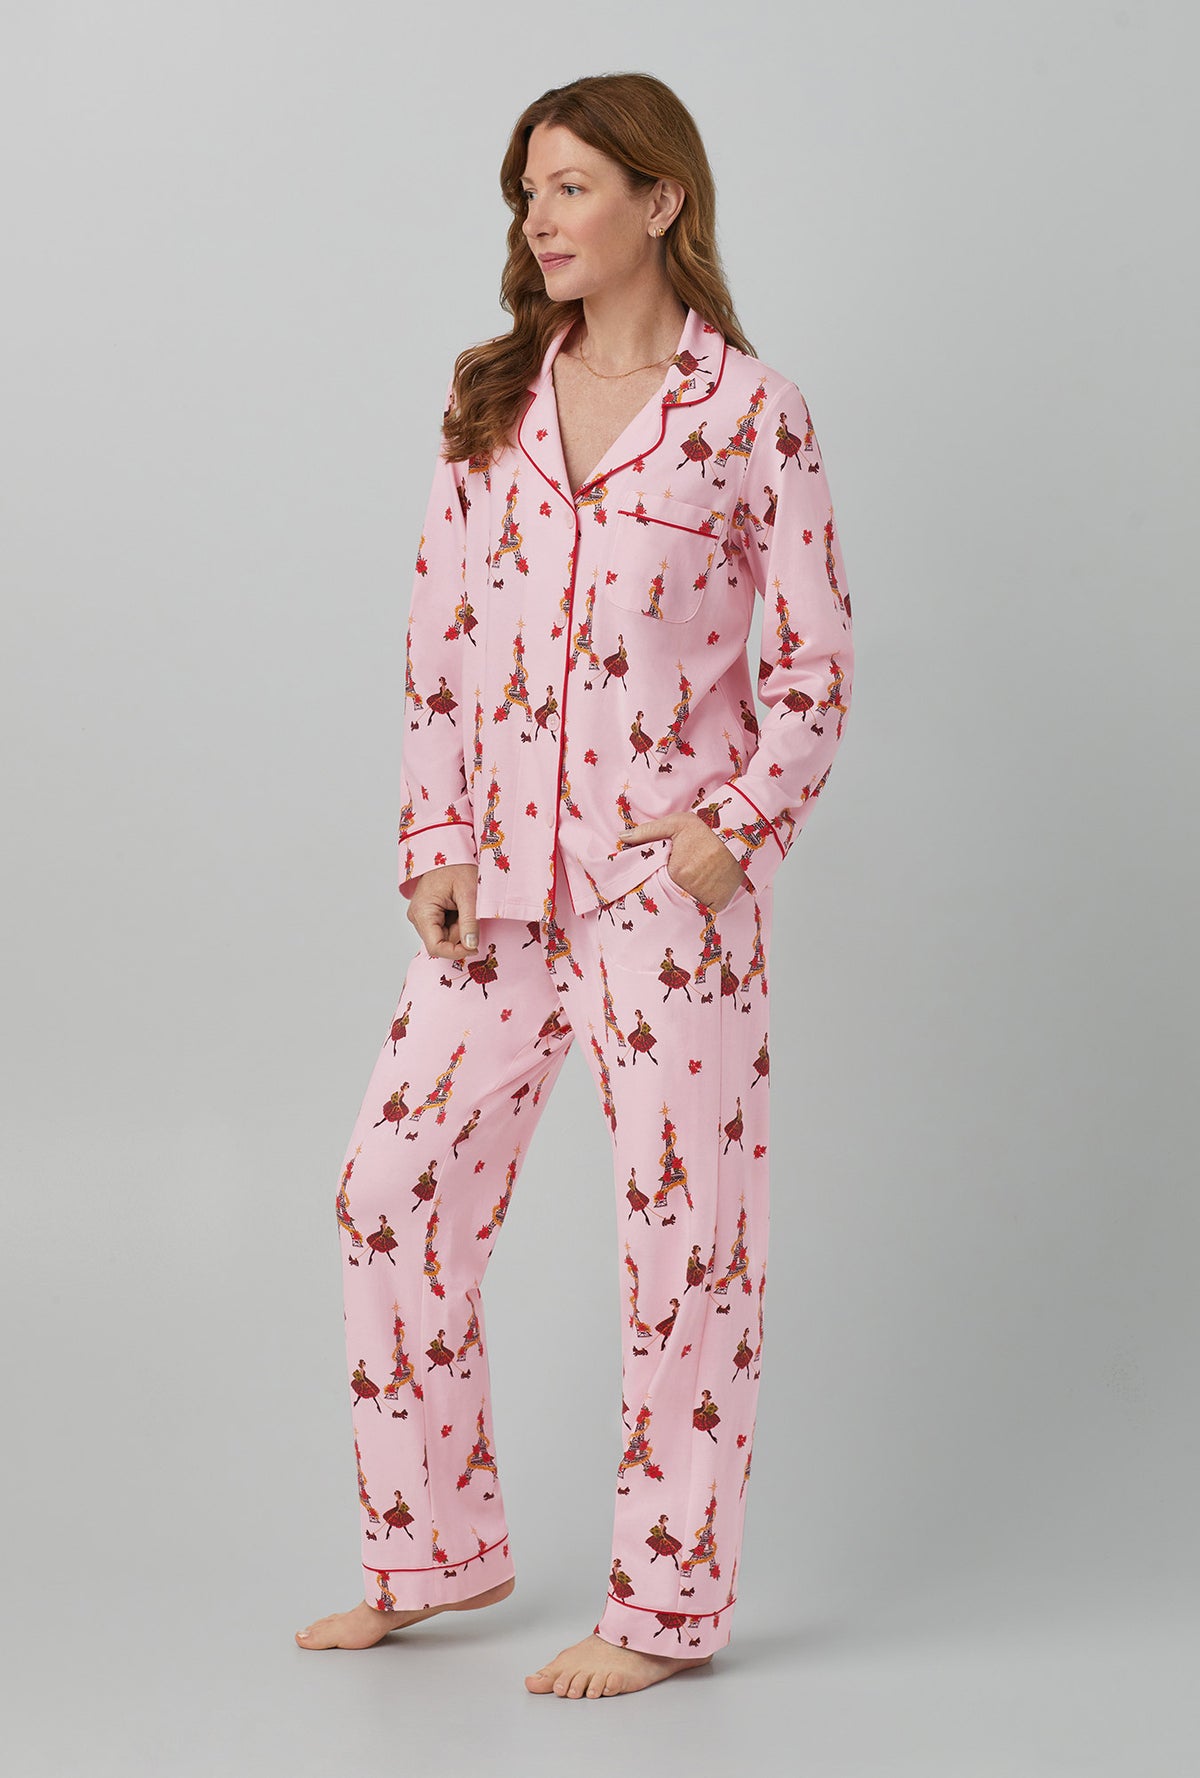 Short Sleeve & Pants Pajama Set, Relax in Refined Comfort